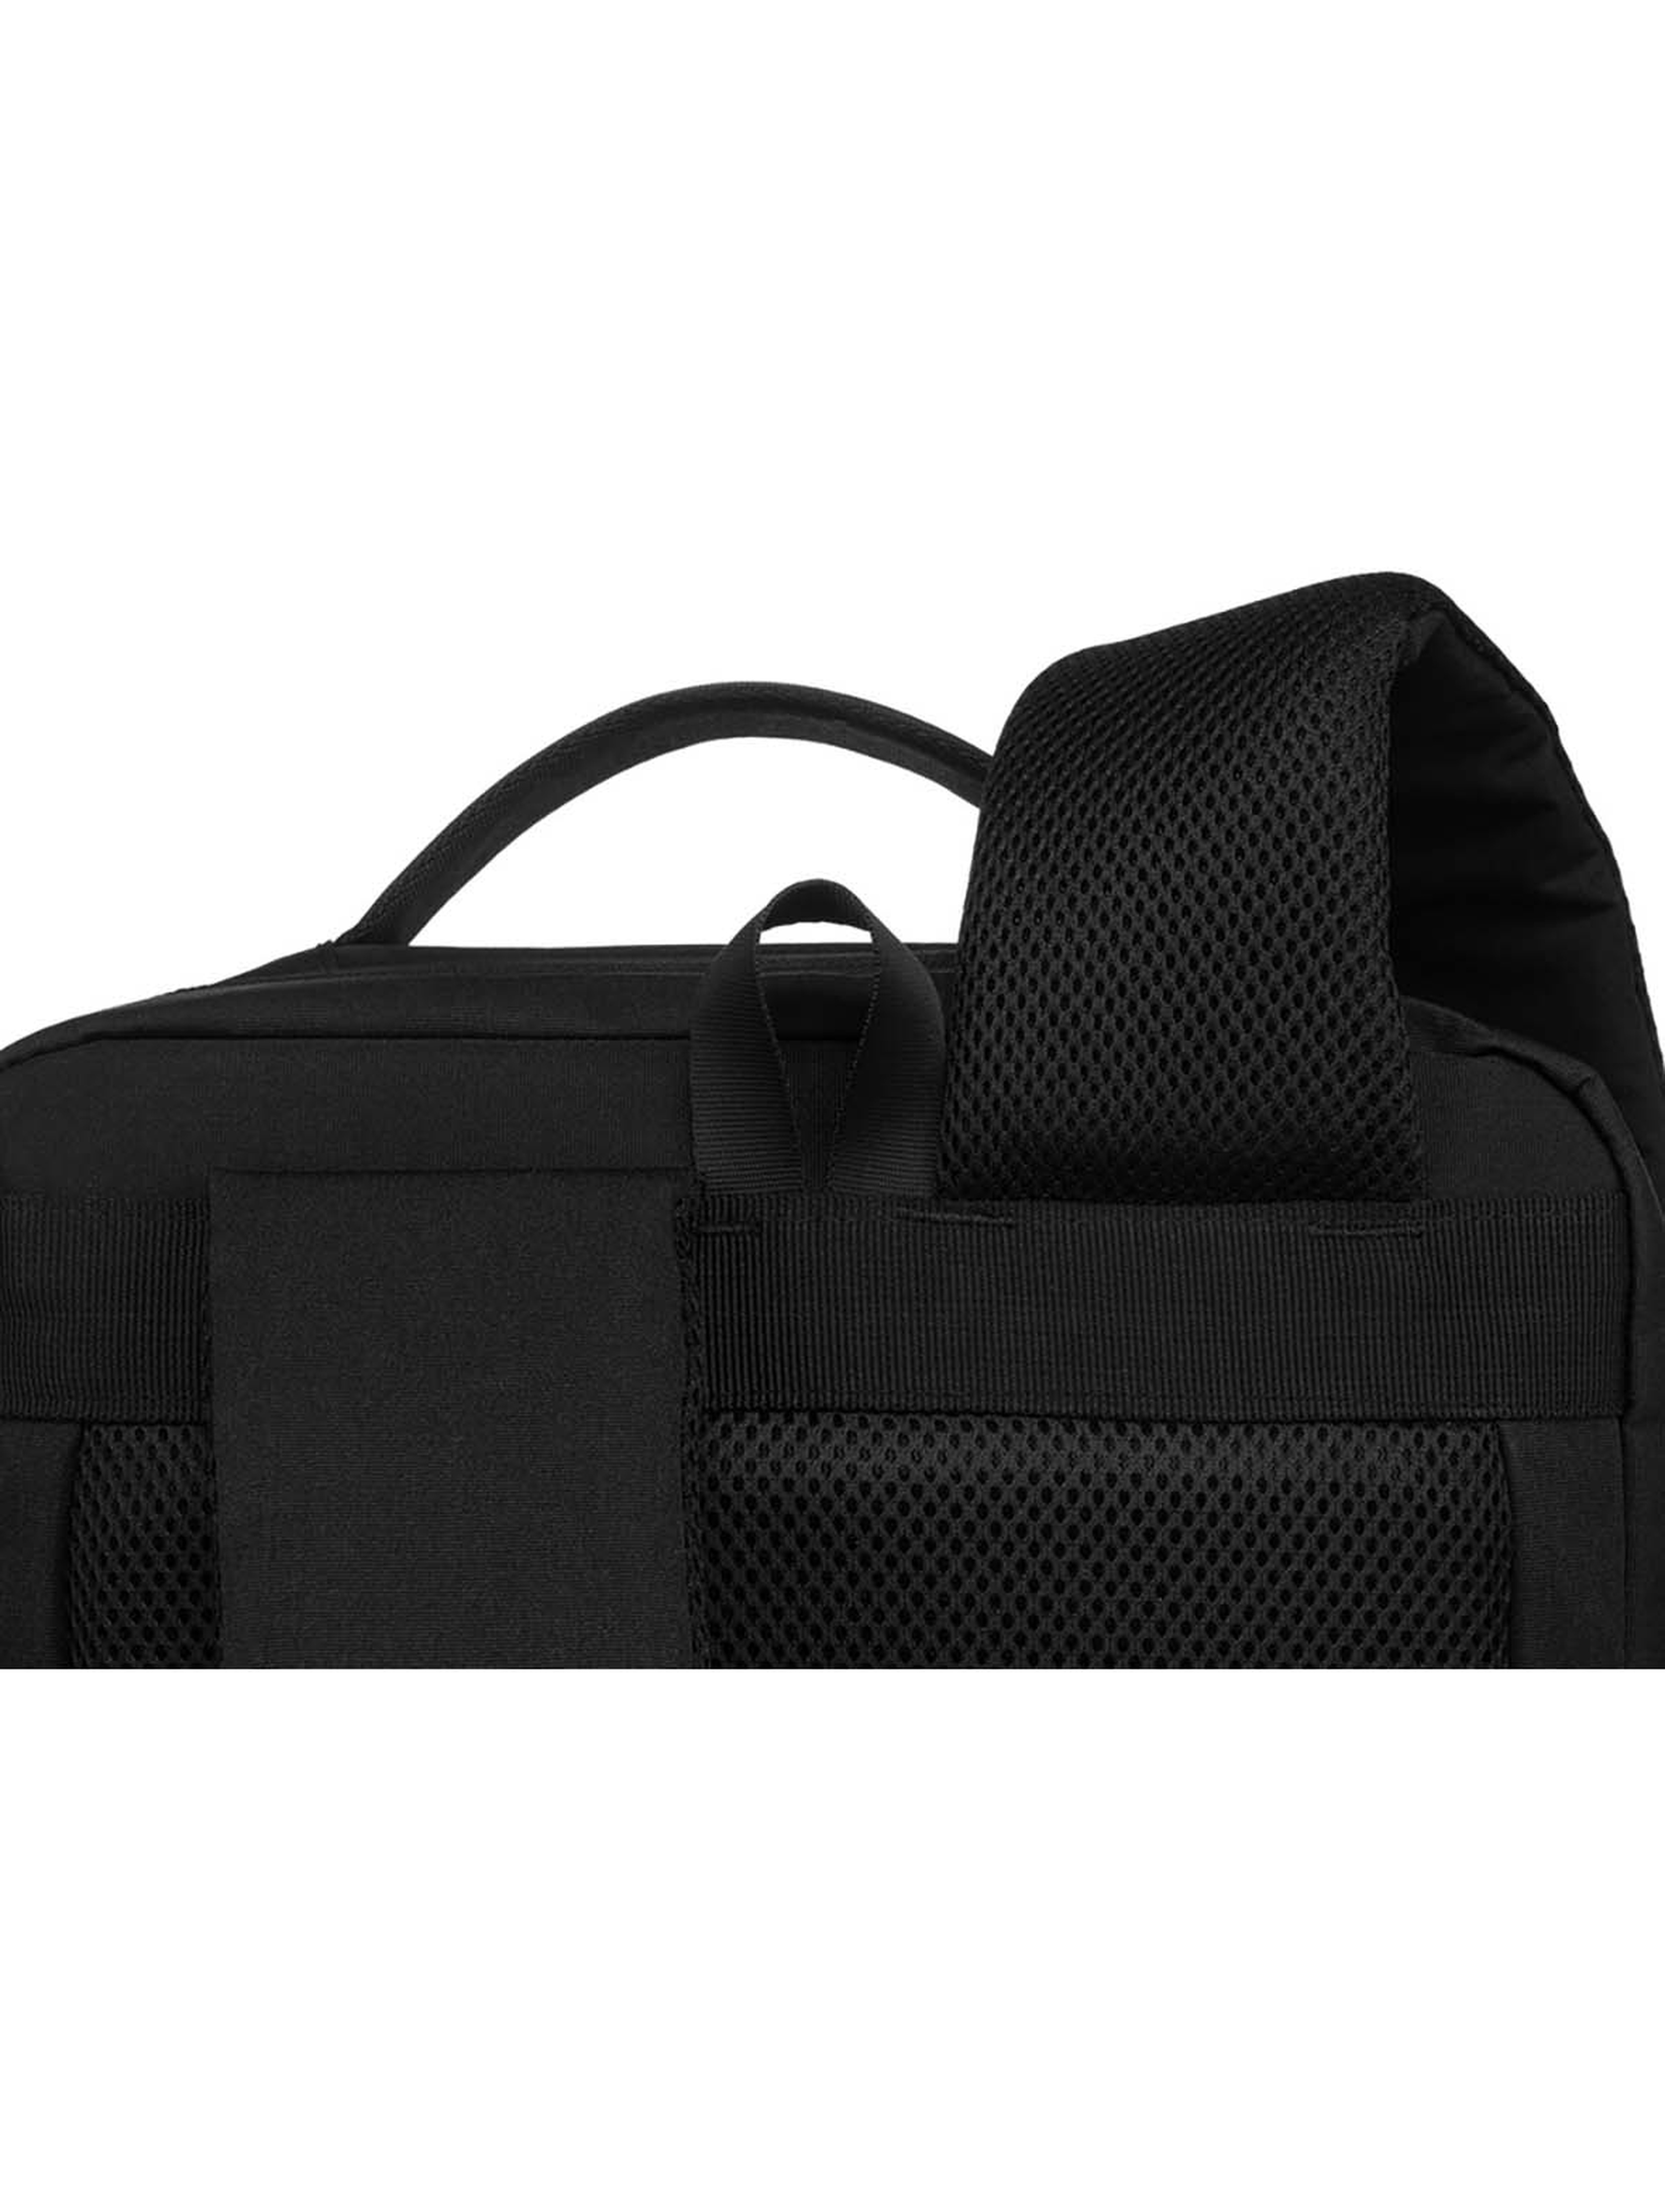 Plecak podróżny czarny z miejscem na laptopa i portem USB